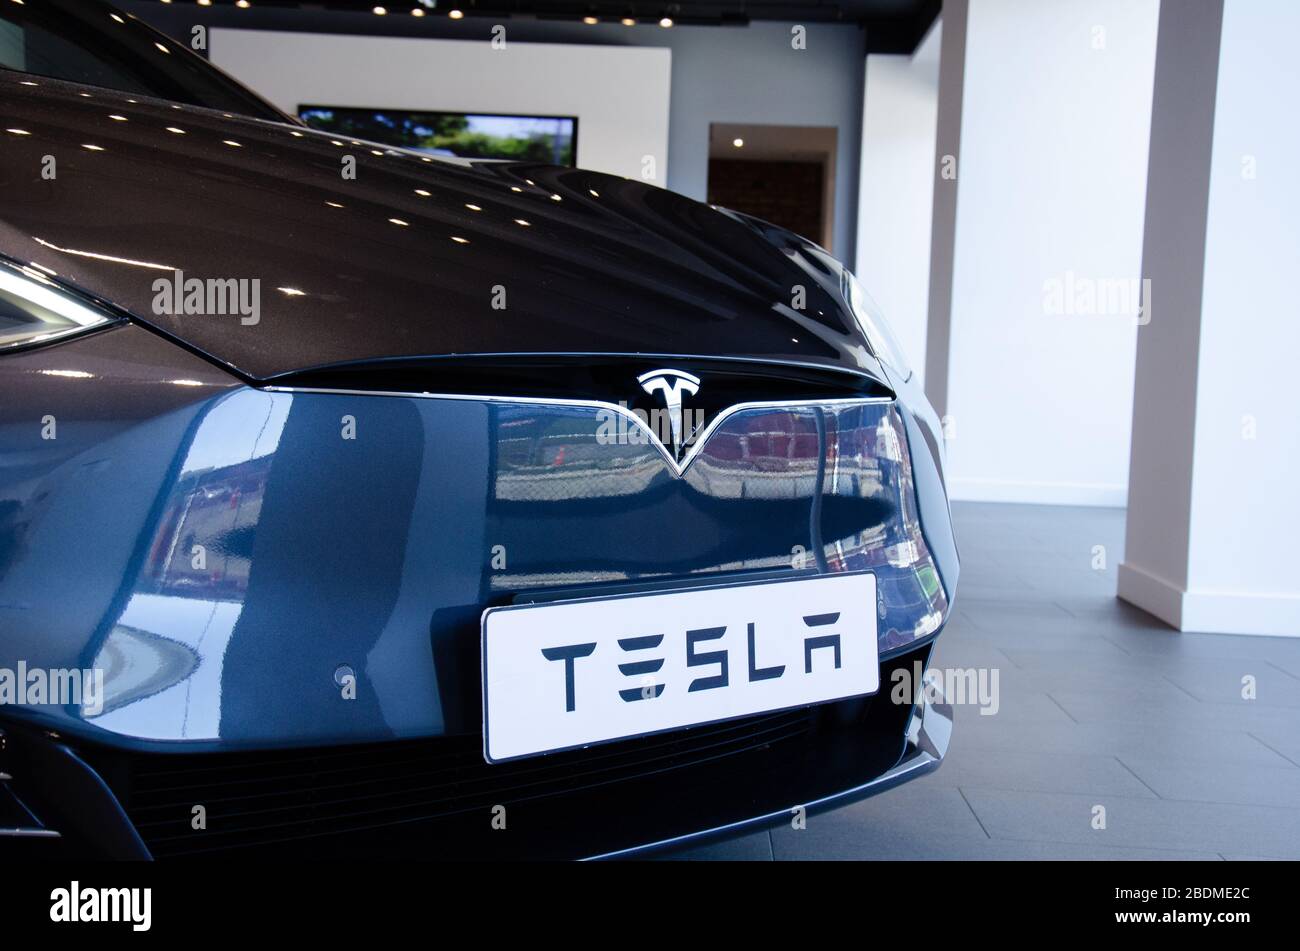 AUCKLAND, NEW ZEALAND - April 4, 2020: Silver Tesla Model S in auckland, new zealand showroom Stock Photo